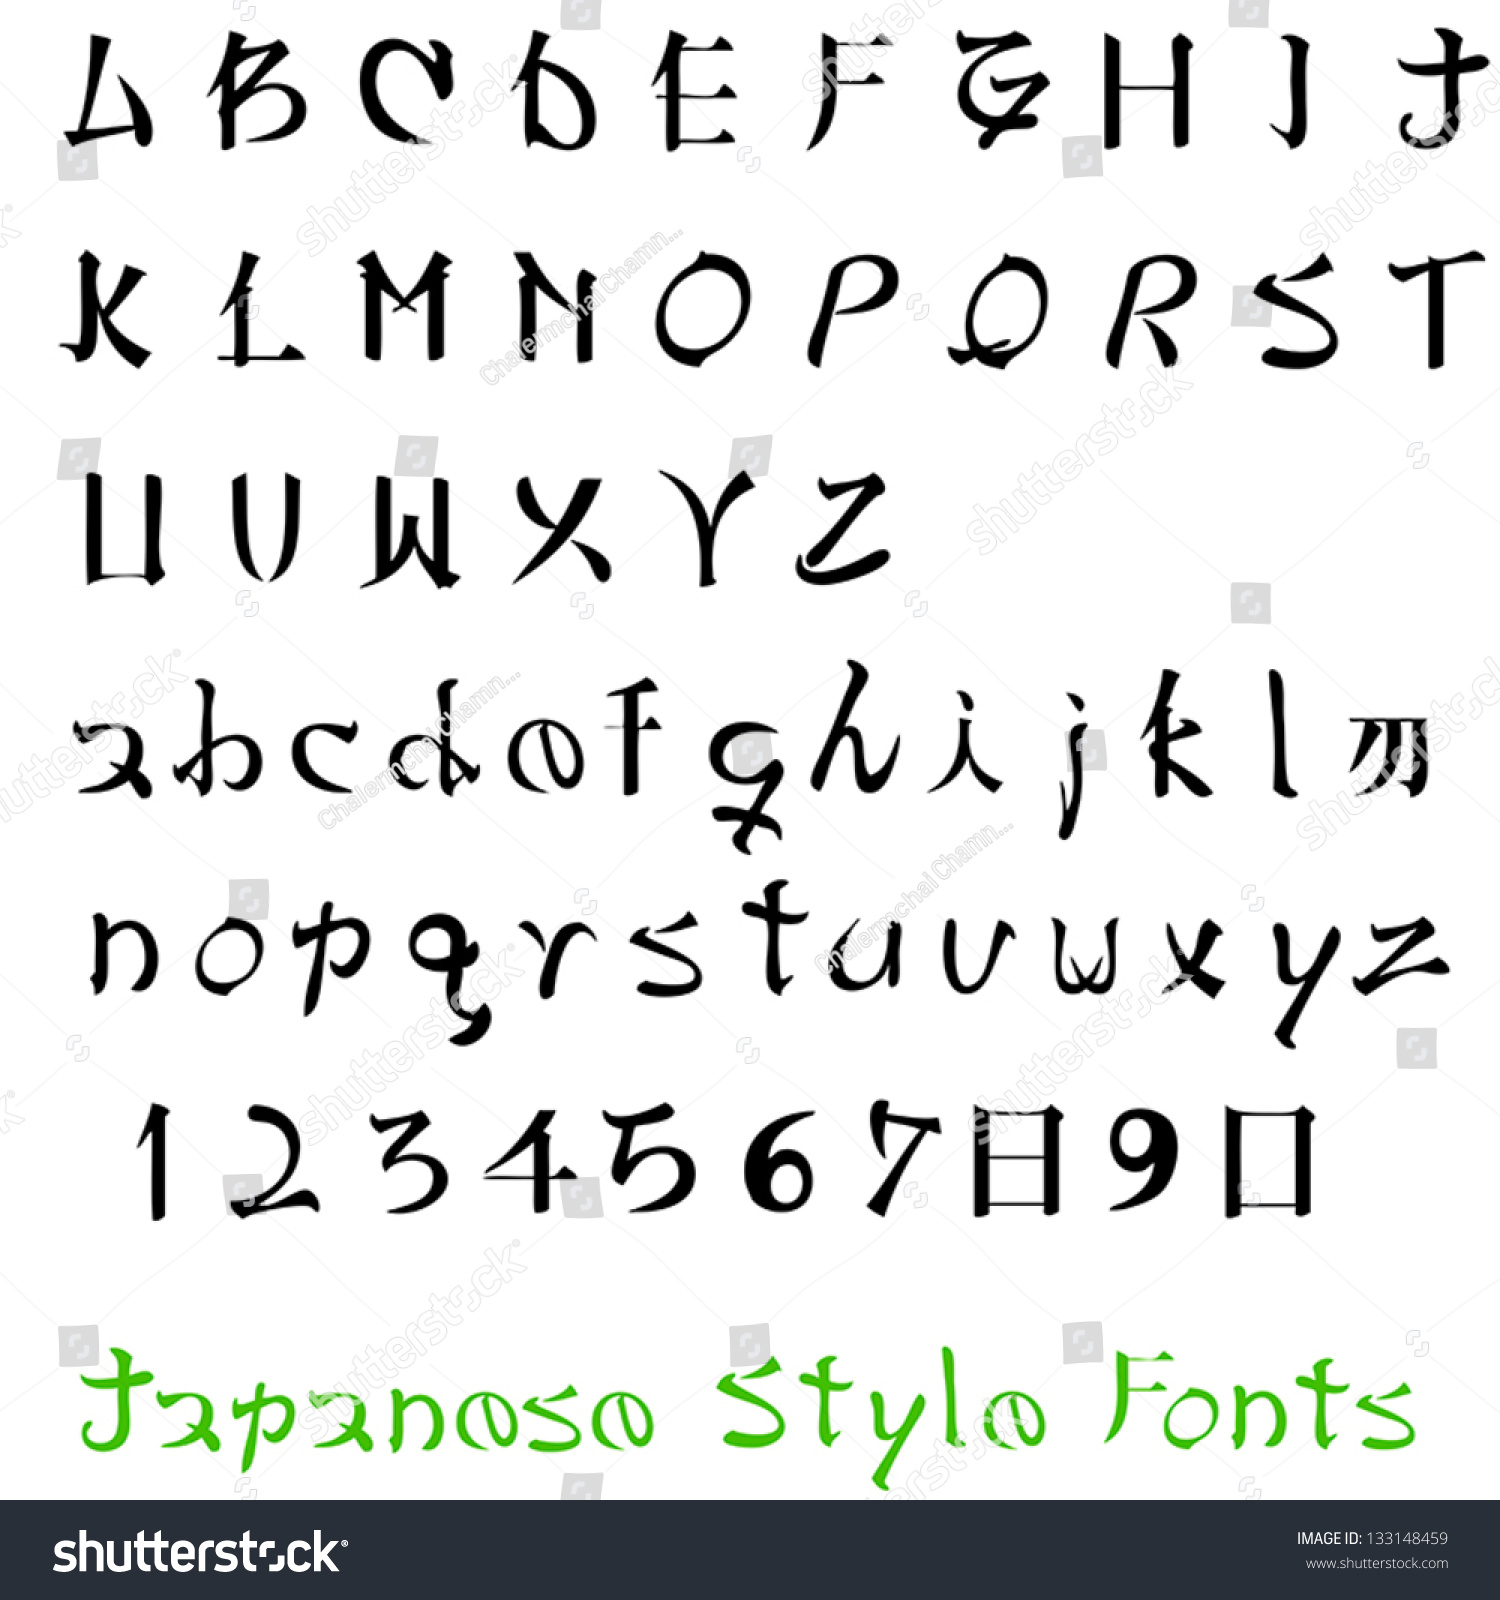 Alphabet Letters Alphabet Japanese Style Stock Vektorgrafik Lizenzfrei 133148459 Shutterstock